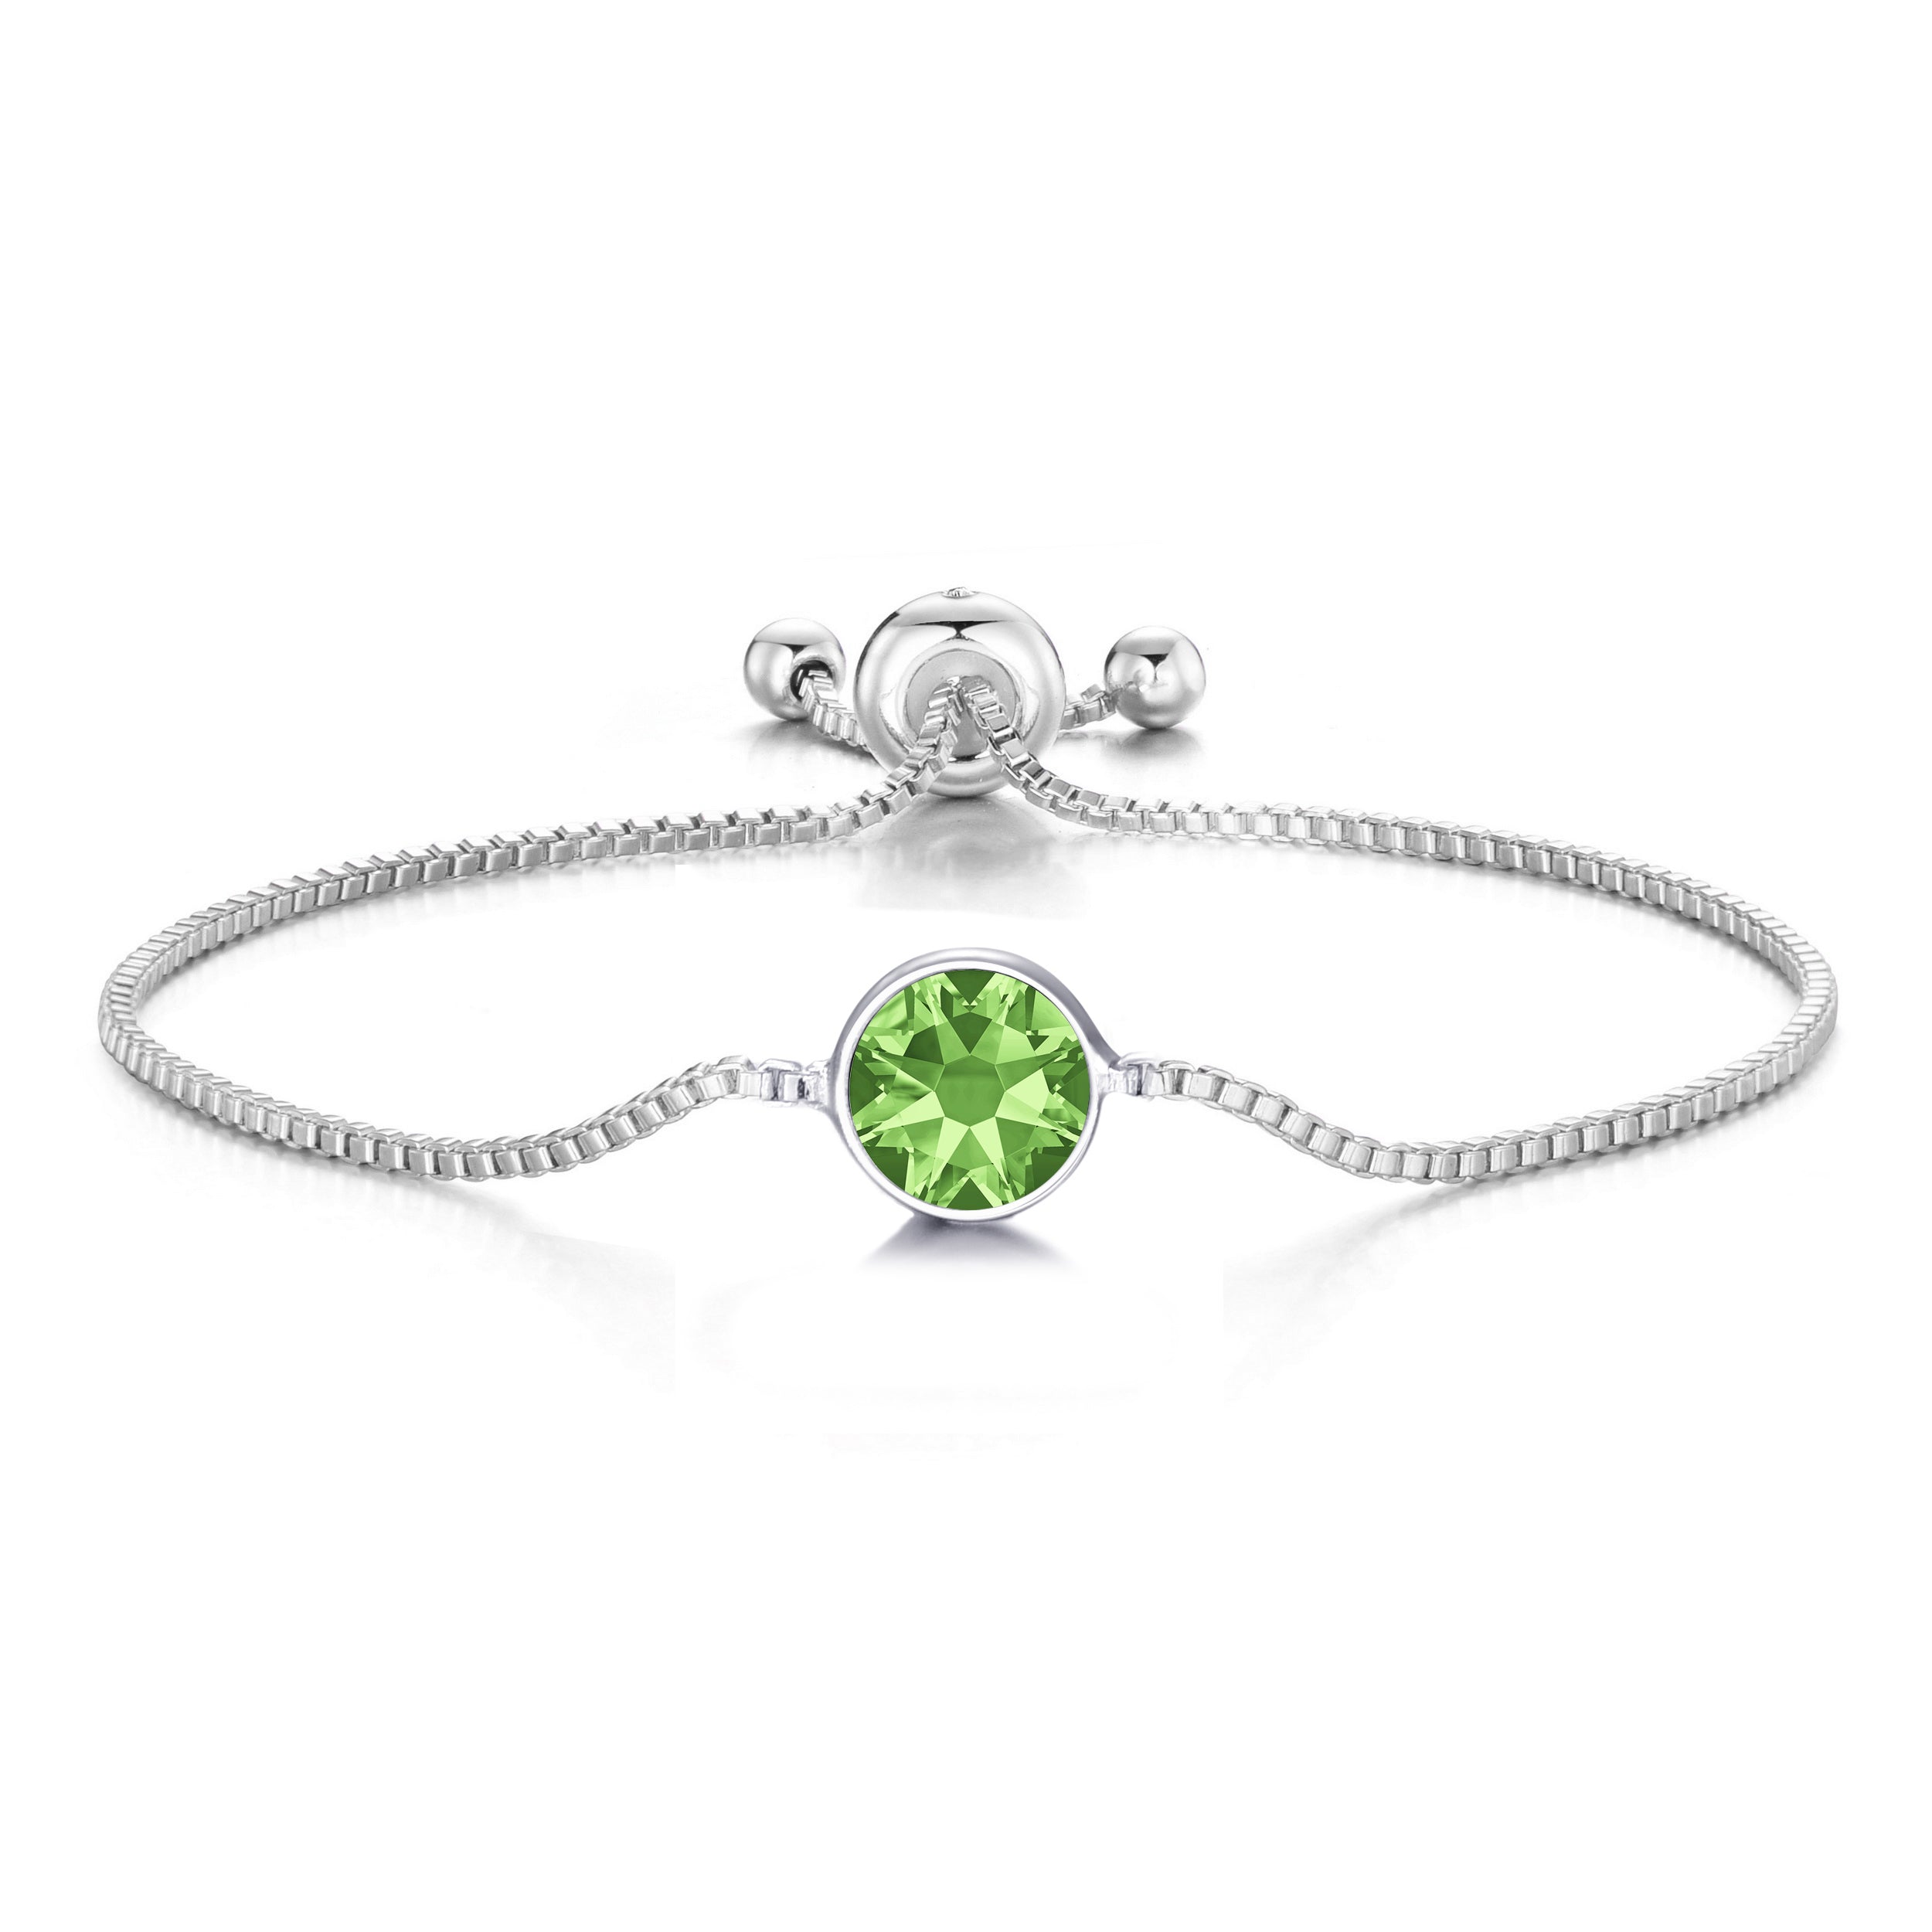 Light Green Crystal Bracelet Created with Zircondia® Crystals by Philip Jones Jewellery